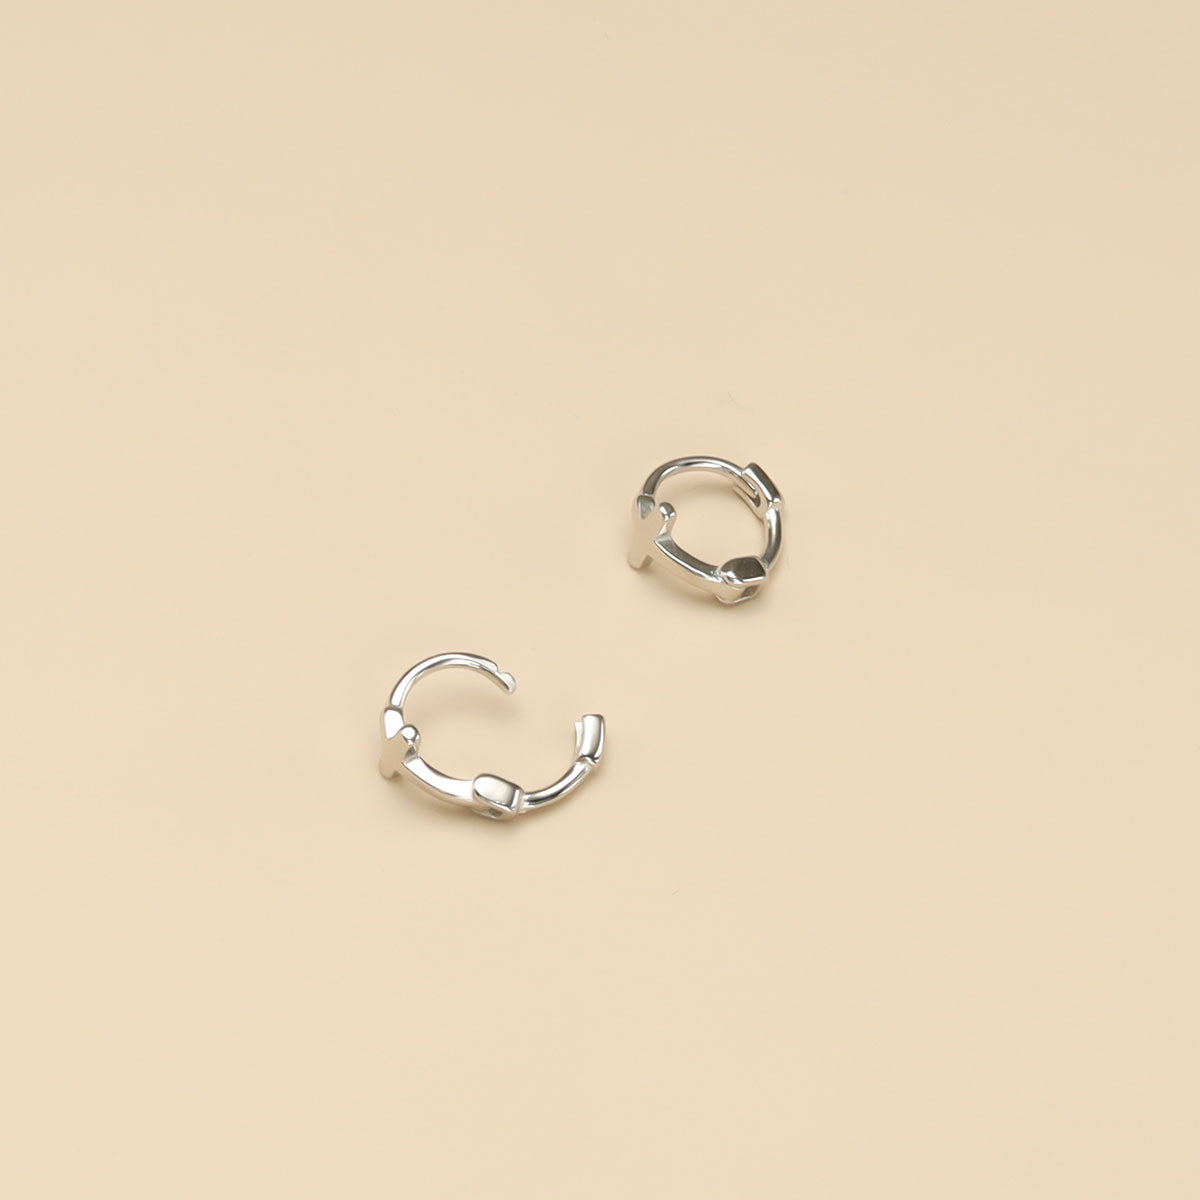 A pair of silver cross earrings.